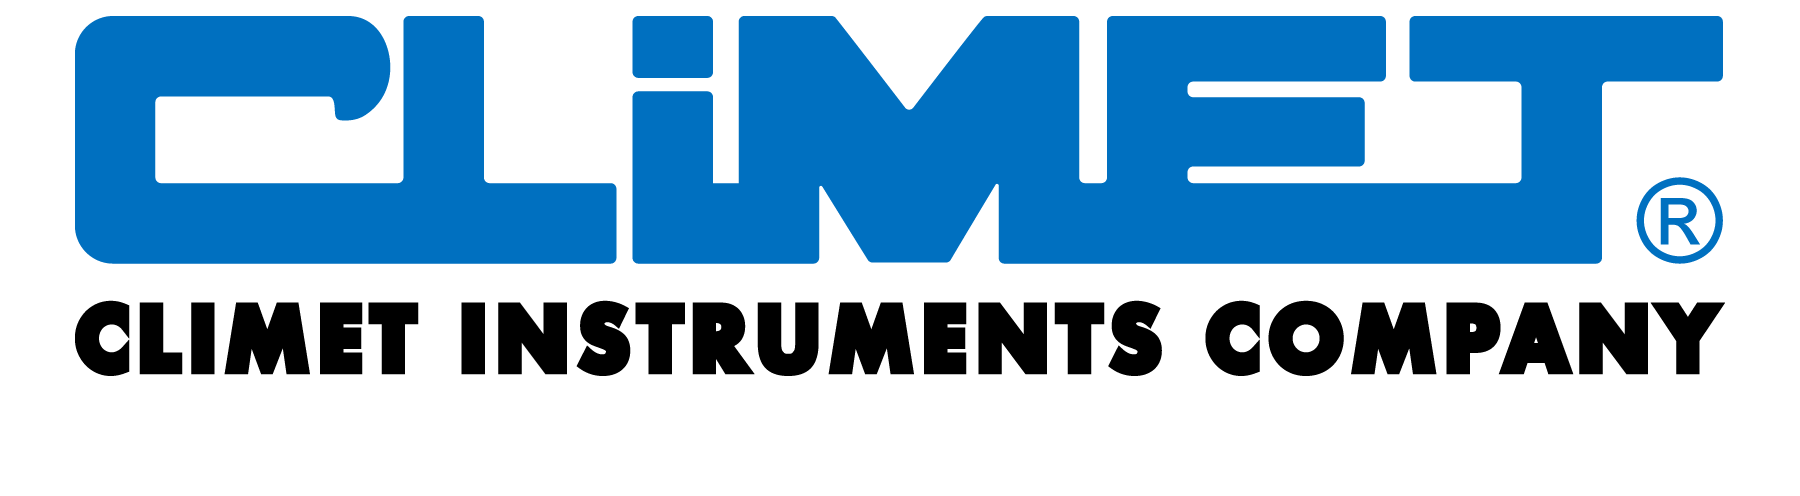 Climet Instruments